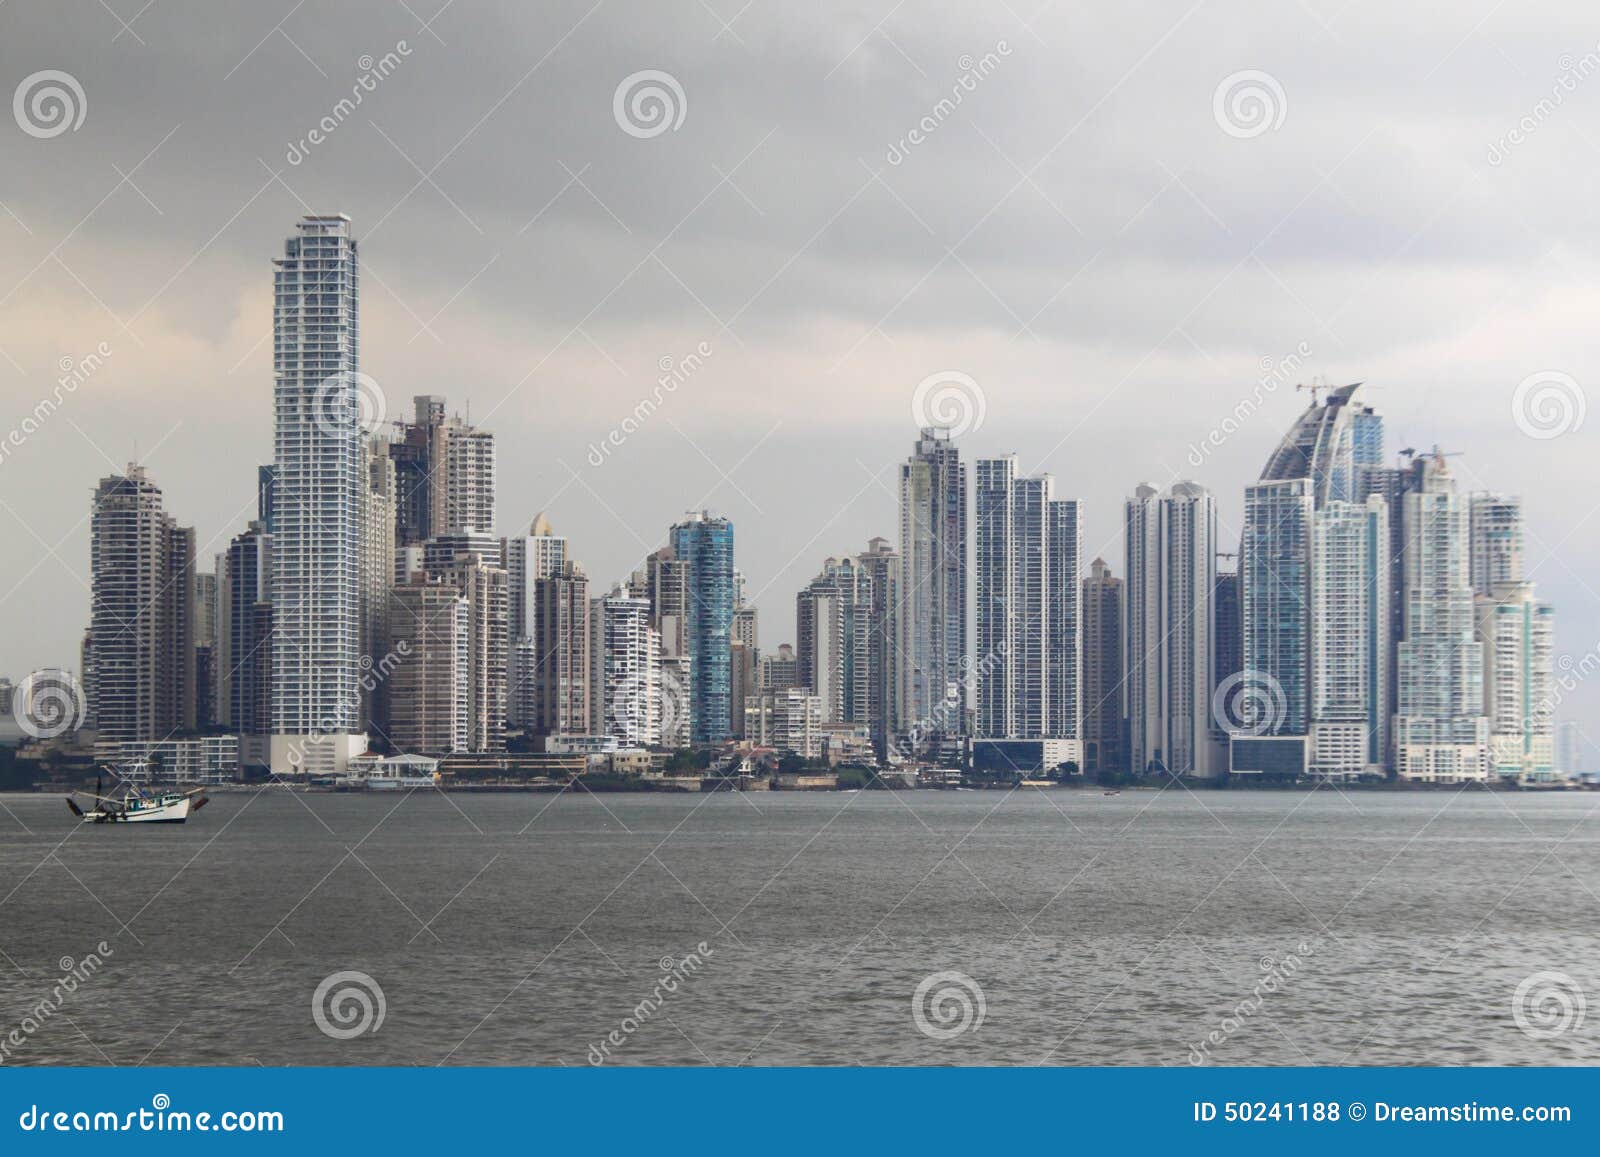 skyline of panama city